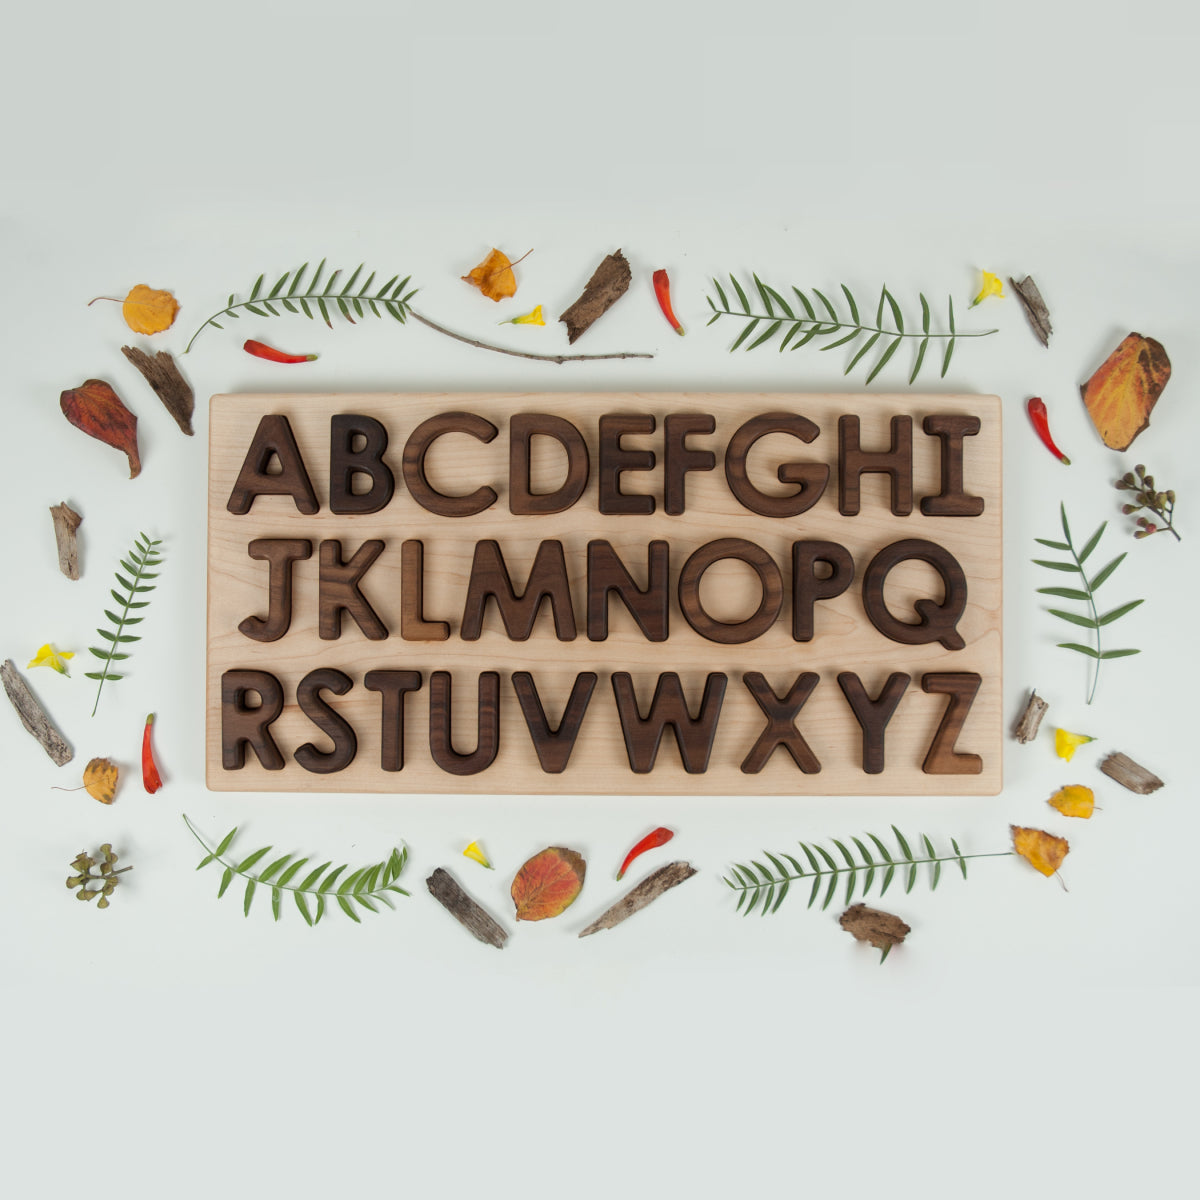 TFJ-4114 From Jennifer Capital Alphabet Letters Puzzle Walnut